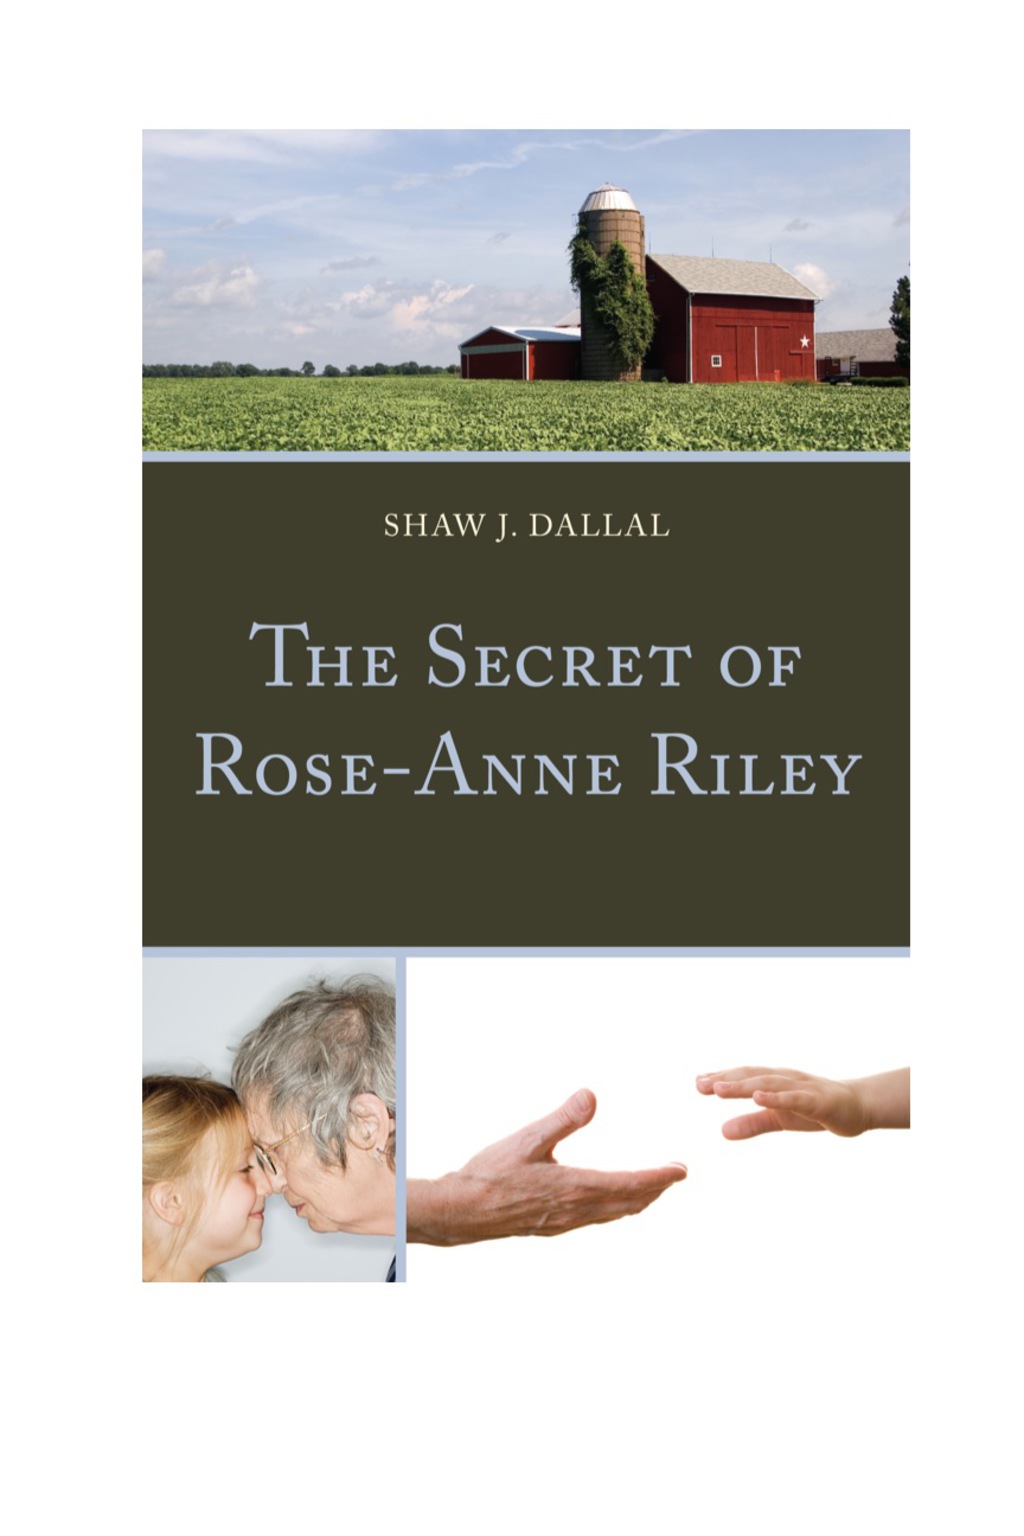 The Secret of Rose-Anne Riley (eBook) - Shaw J. Dallal,